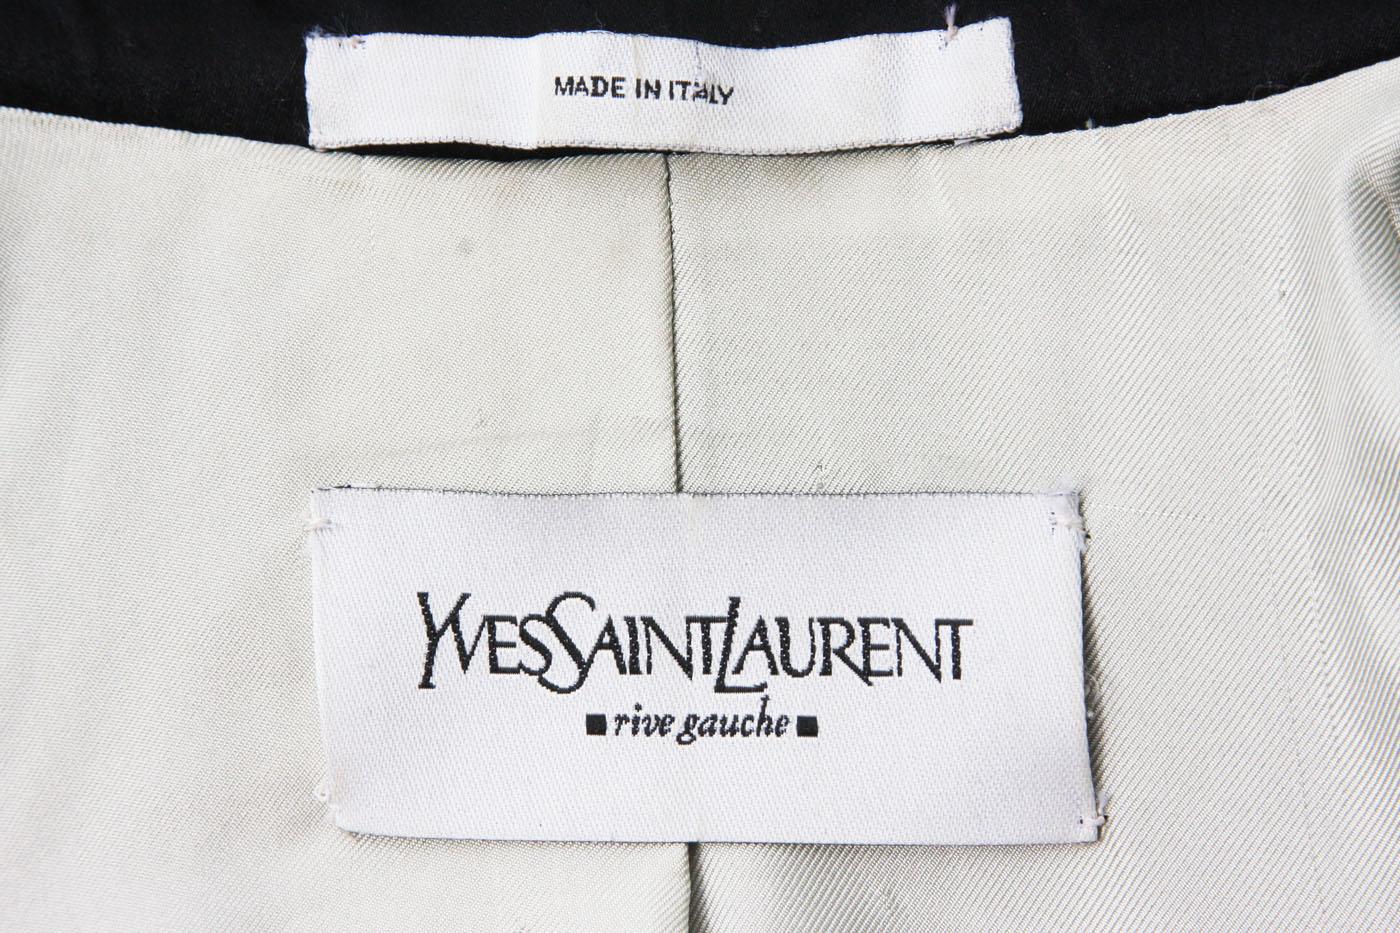 Tom Ford for Yves Saint Laurent F/W 2004 Chinoiserie Jacquard Skirt Suit Fr 38   For Sale 3